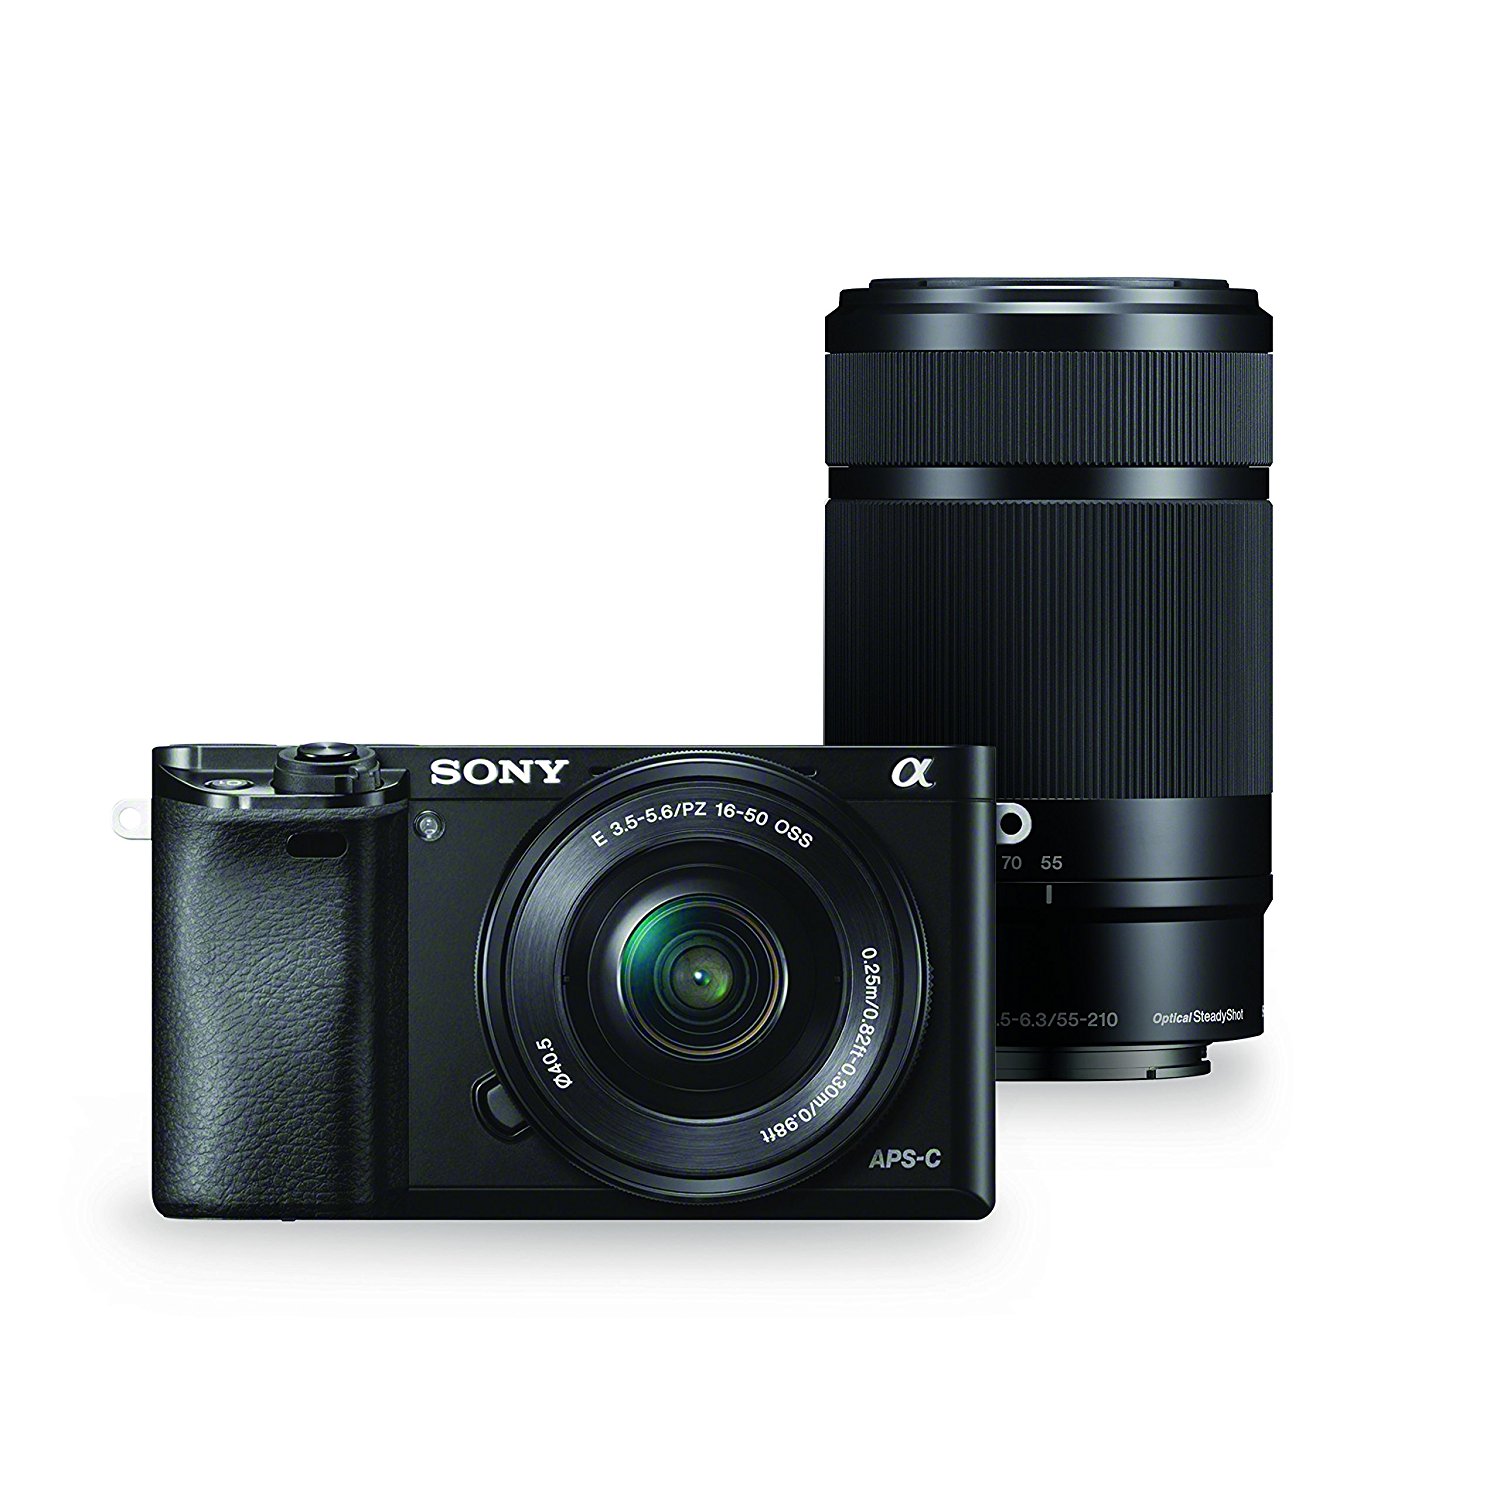 Sony 16-50mm 및 55-210mm 렌즈 및 이미징 소프트웨어가 포함 된 Alpha a6000 카메라 (그래파이트)